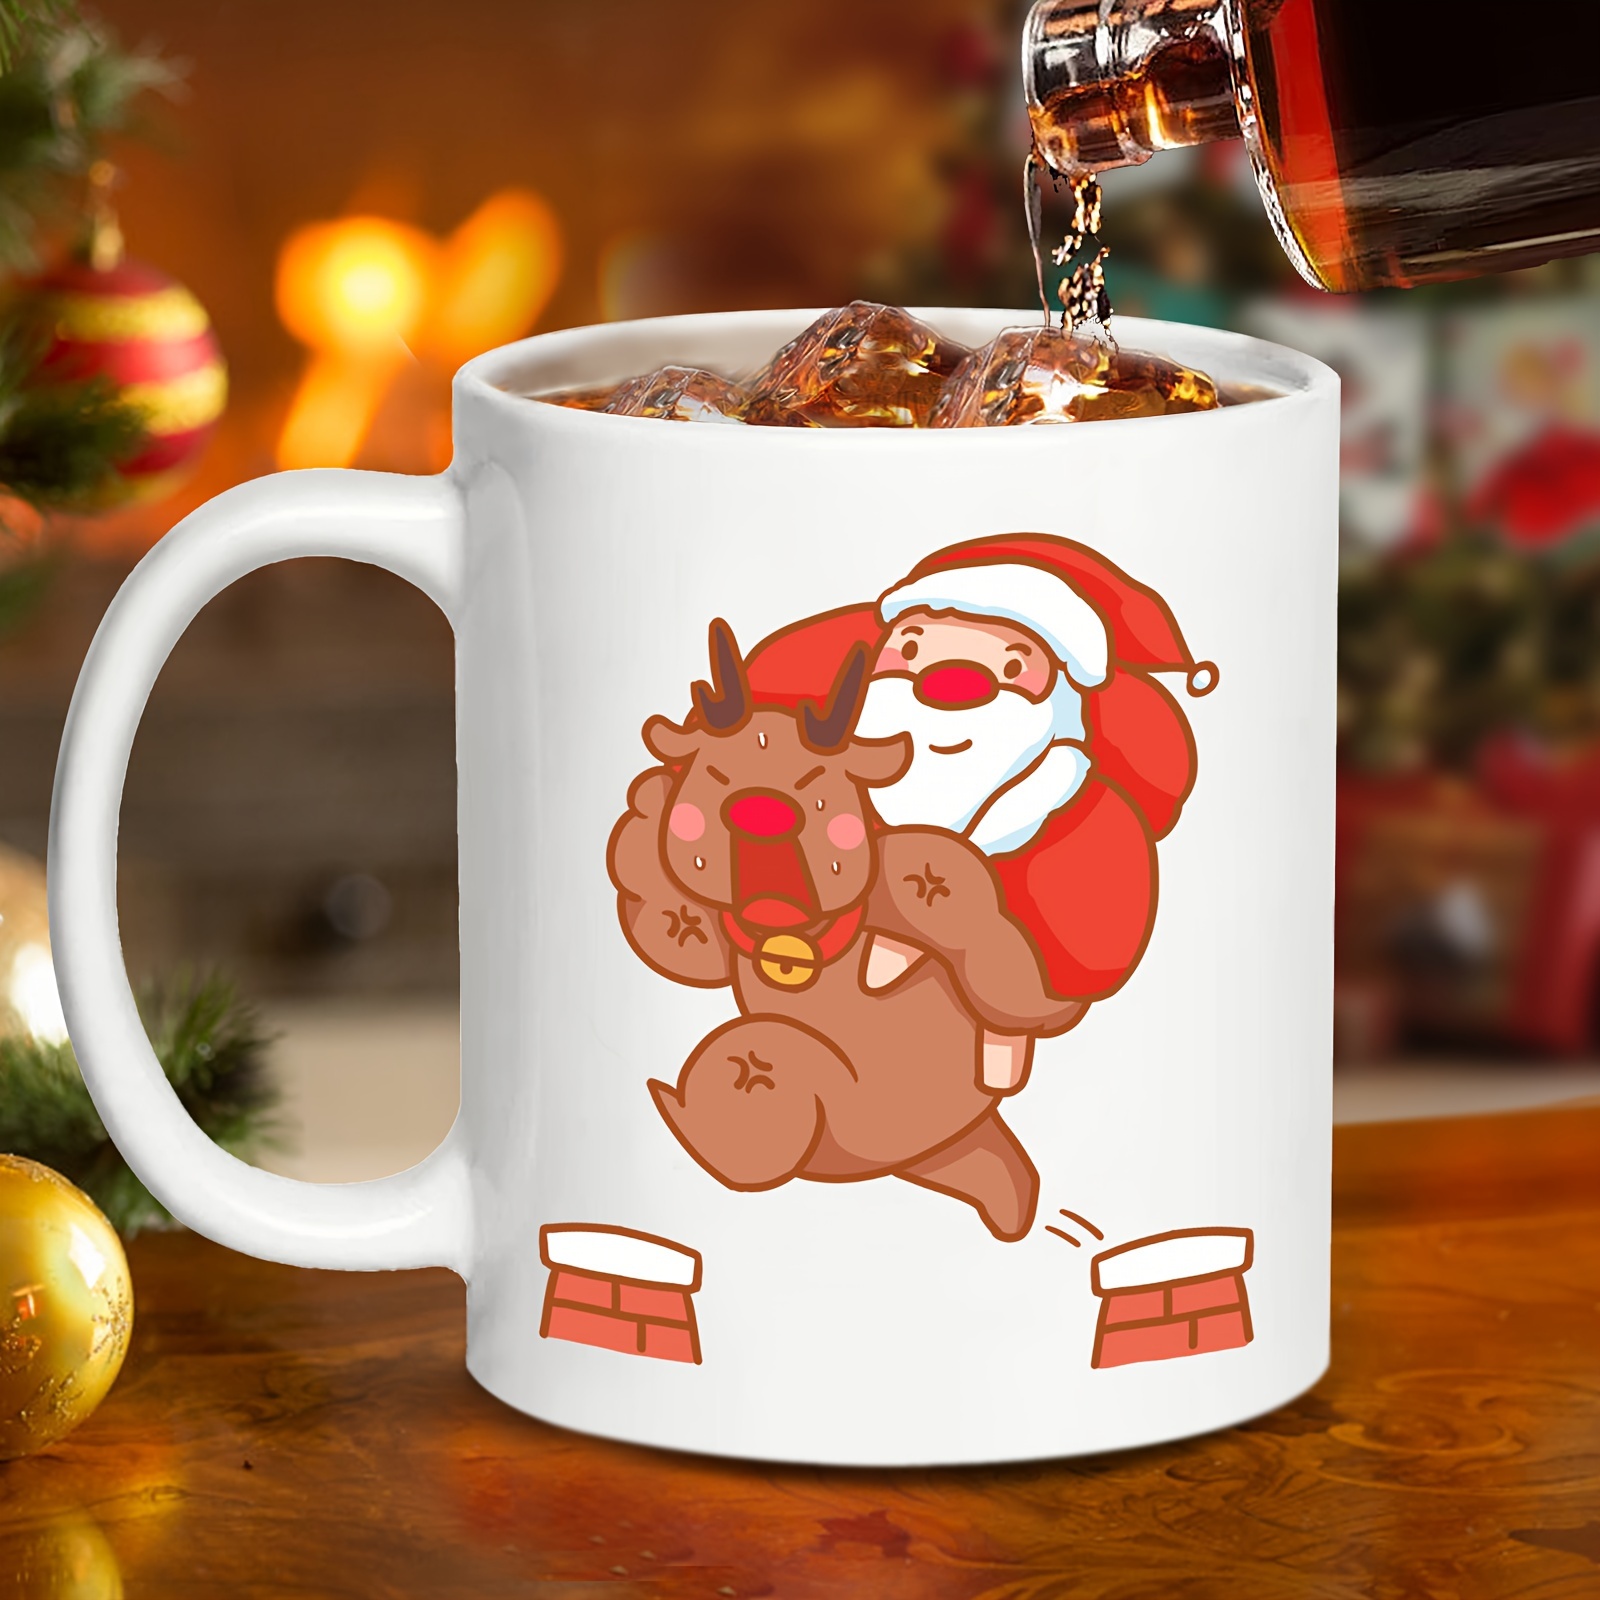 I LOVE hot moms - Coffee Mug. Coffee Tea Cup Funny Words Novelty Gift  Present White Ceramic Mug for Christmas Thanksgiving